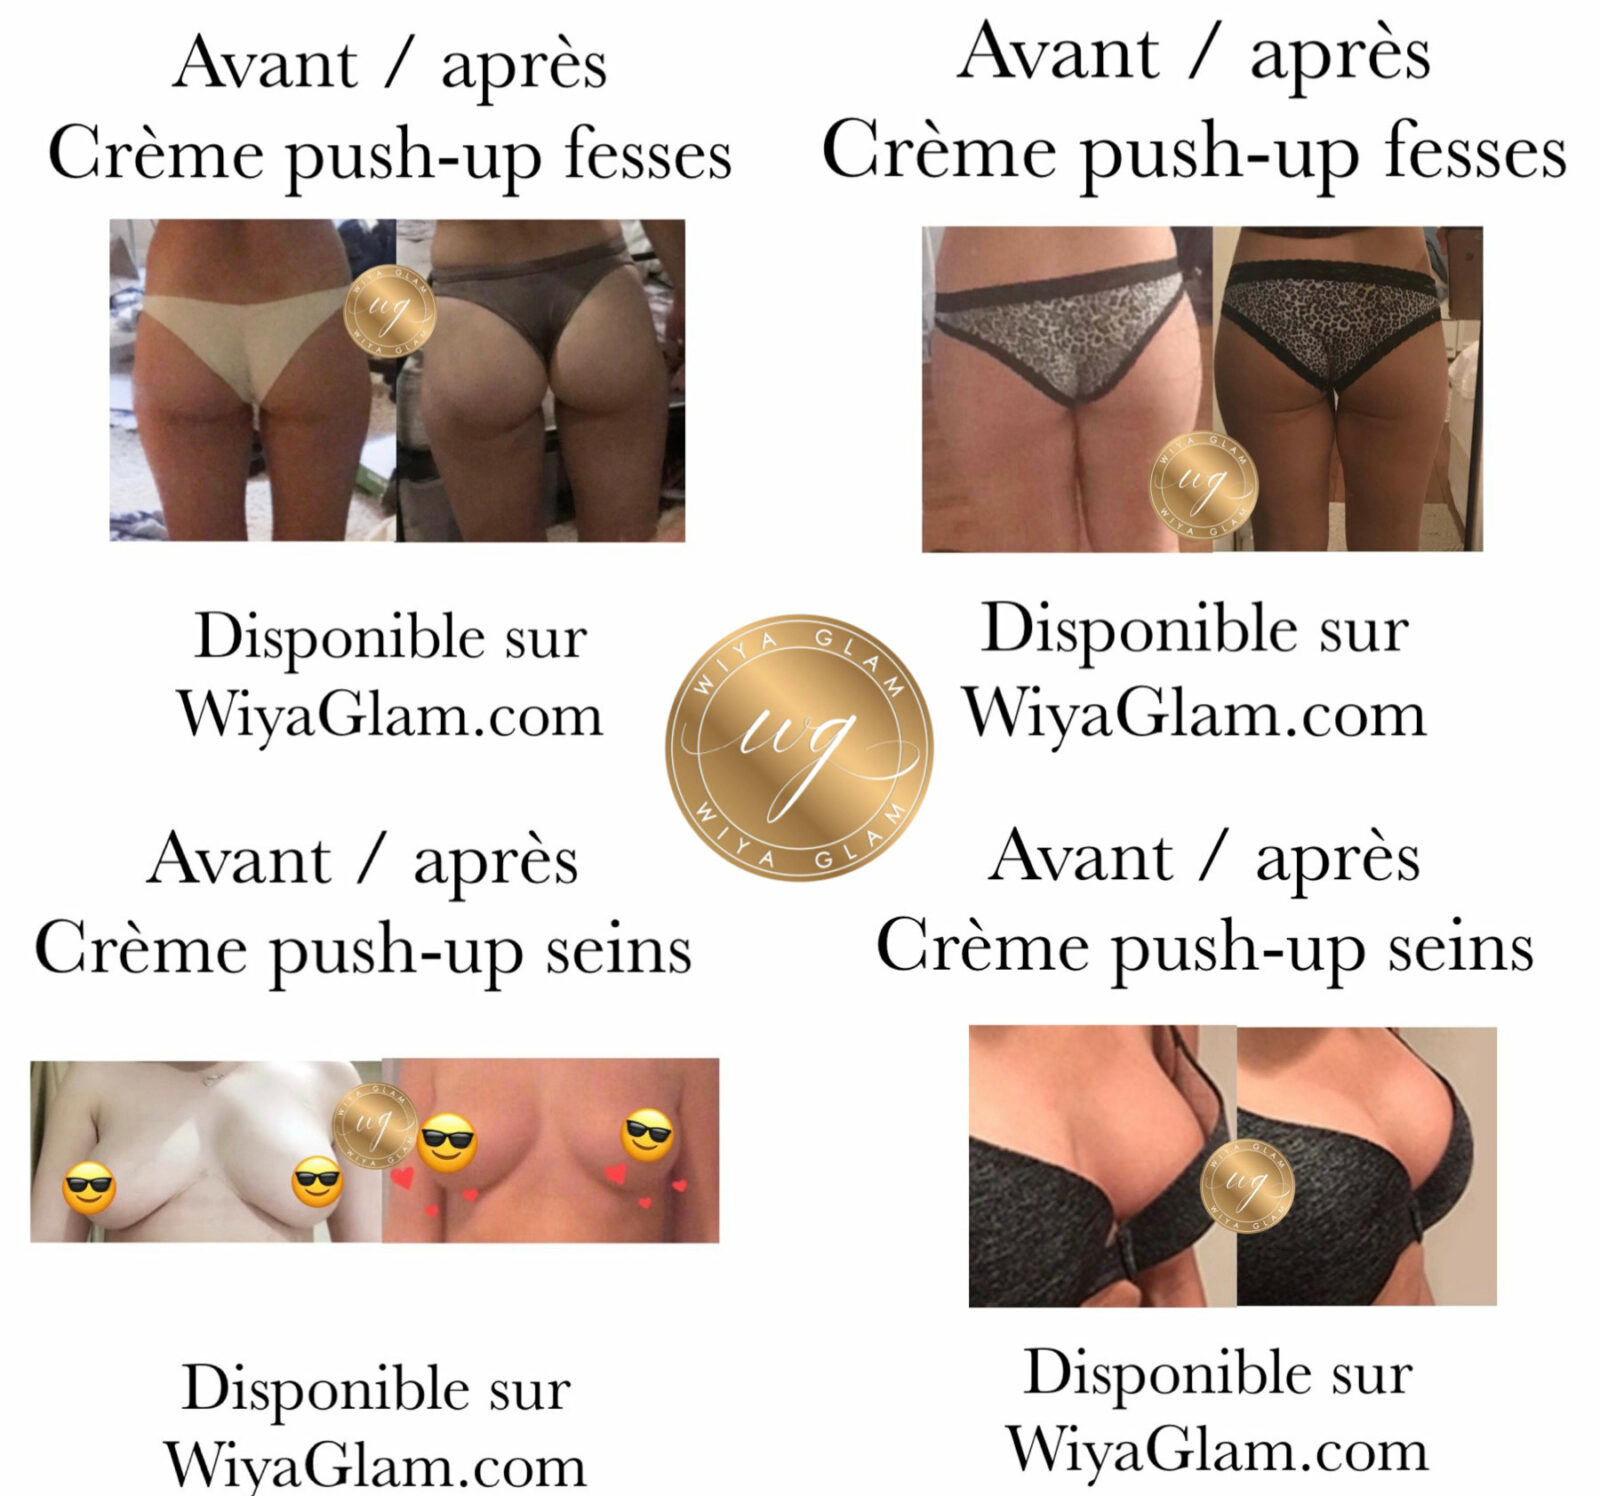 Wiya Glam: les crèmes volume seins et fesses 
https://mail.one.com/api/kathleen.danglades%40omagazine.fr/mail/1/INBOX/1597678408/68/7?contentId=175d788c38427270a1b2&size=568208